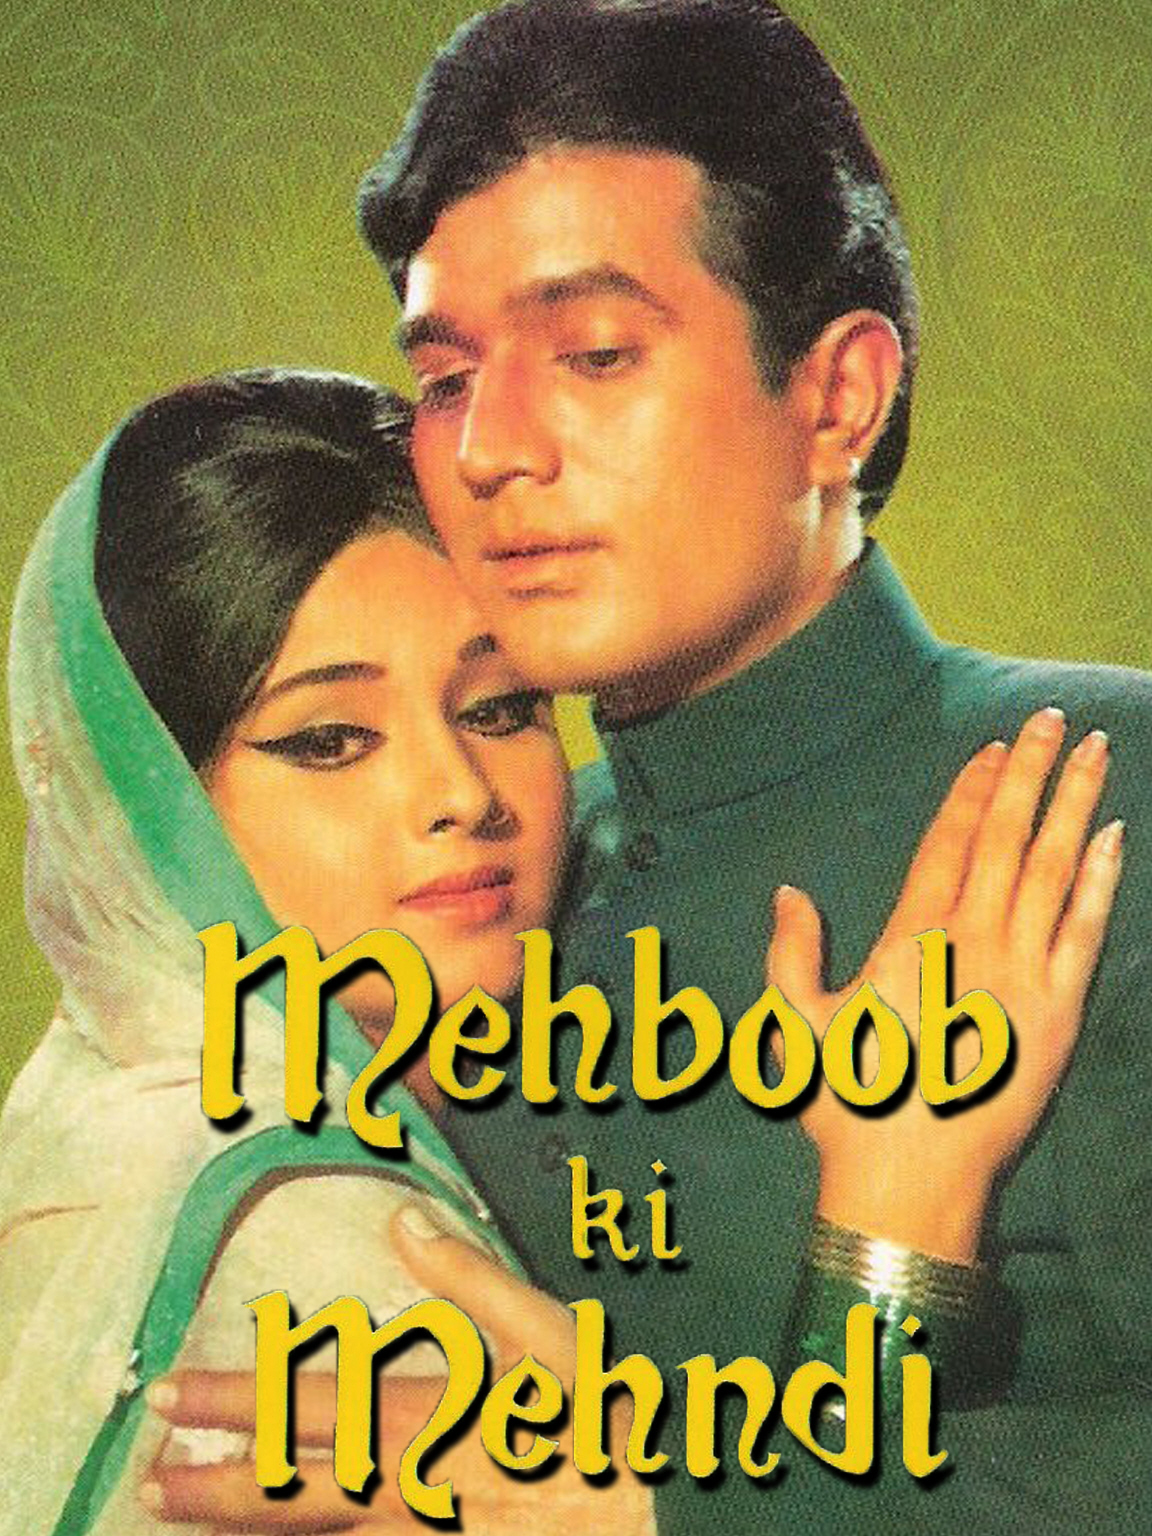 Mehboob Ki Mehndi (1971) | MemsaabStory